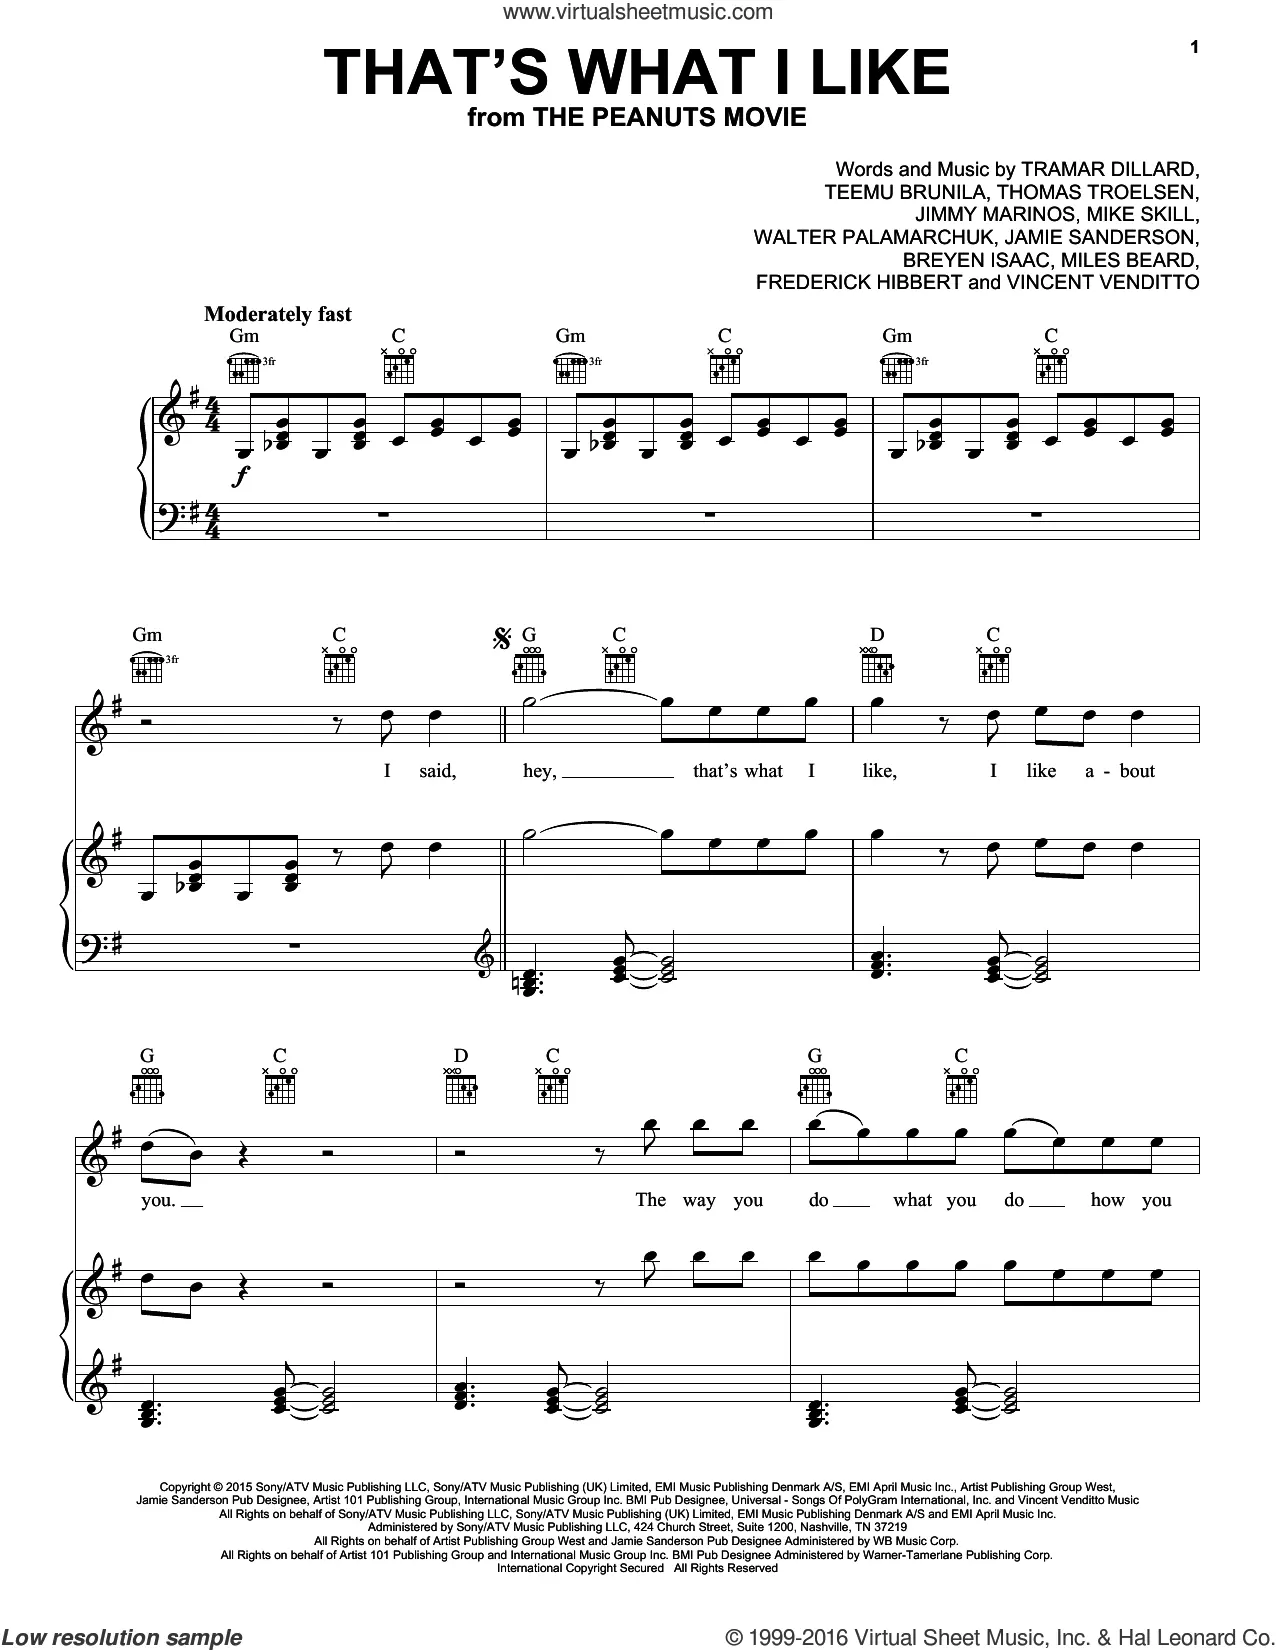 Right Round Piano, Vocal & Guitar Chords Right-Hand Melody - Online Noten  von Flo Rida feat. Kesha